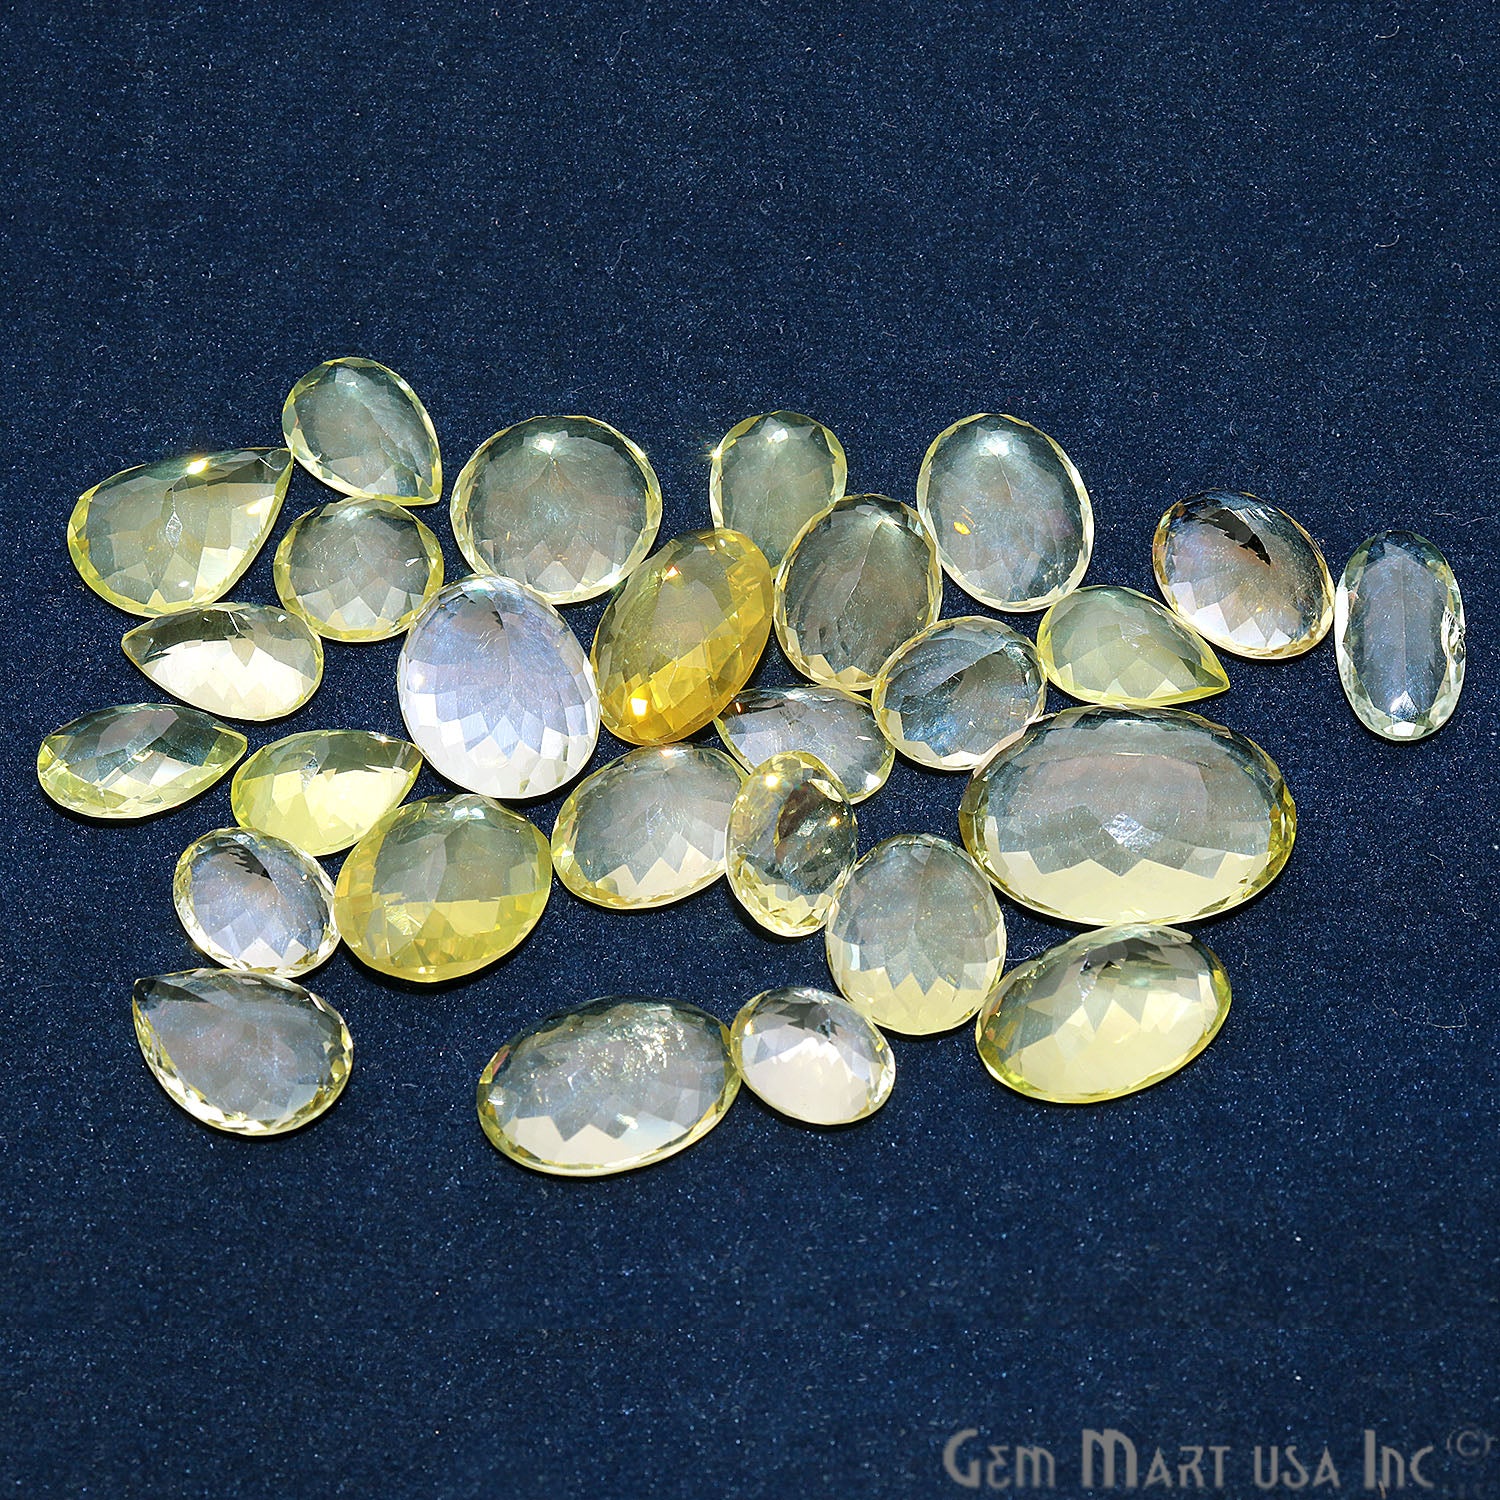 100 Cts Mix Lemon Topaz Stones 10-15mm Faceted Precious Loose Gemstones - GemMartUSA